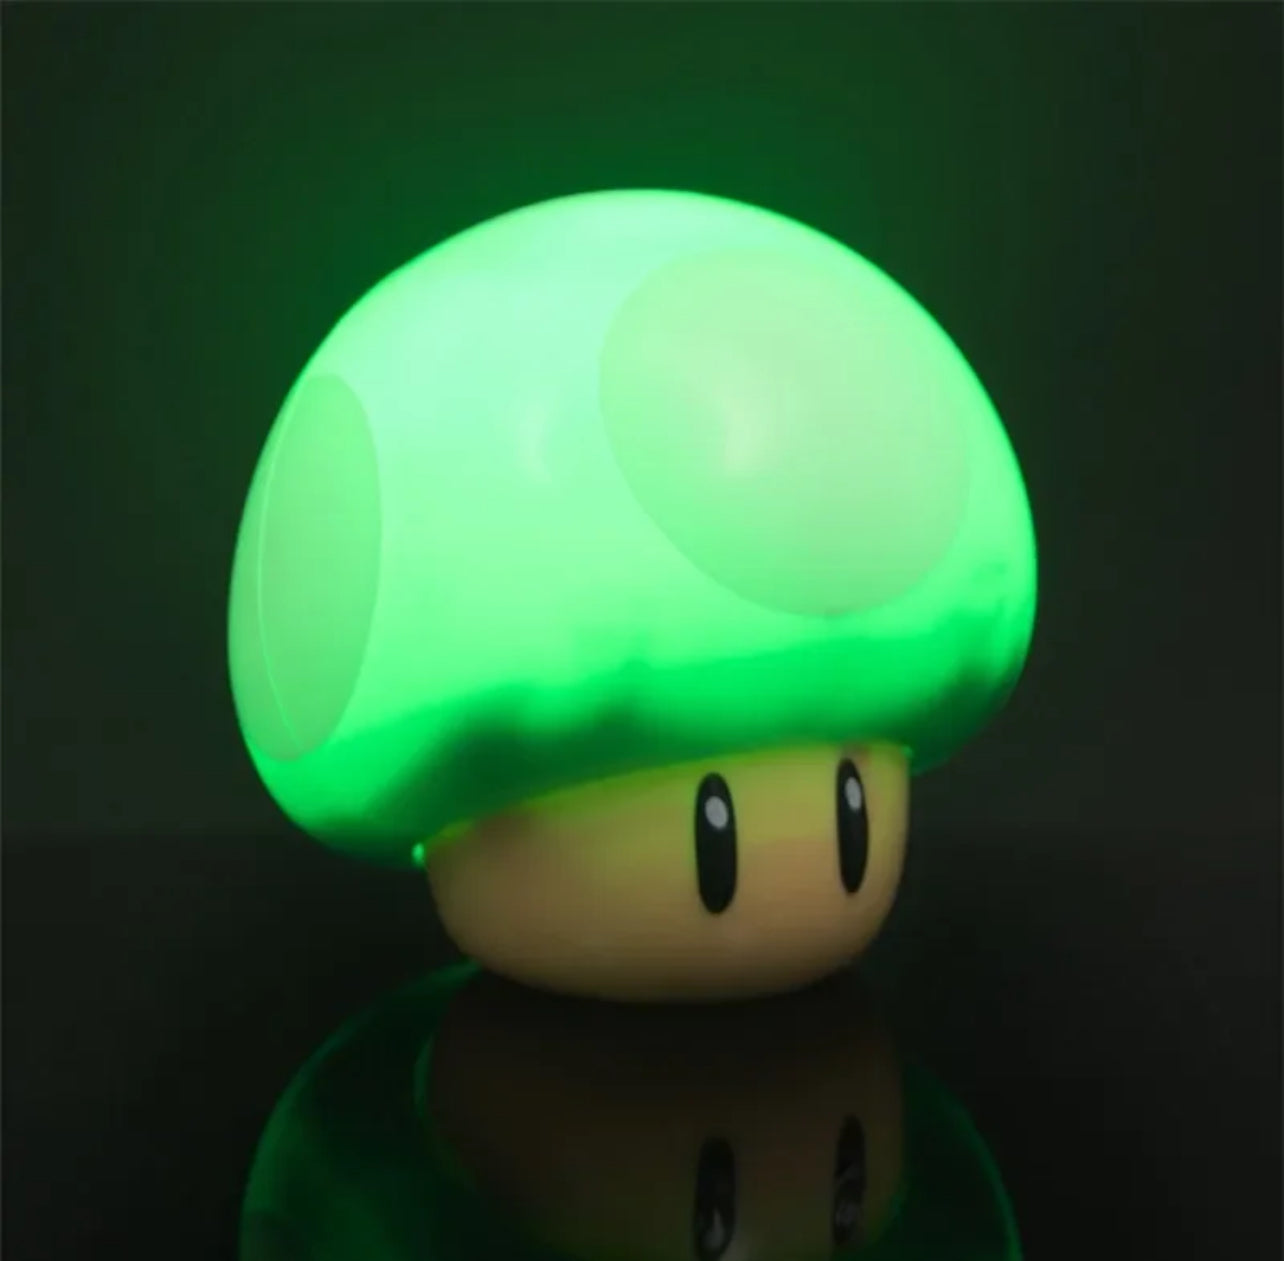 Super Mario Bros Mushroom 1UP Light with Sound, Nintendo Collectable Light Up Figure - Green